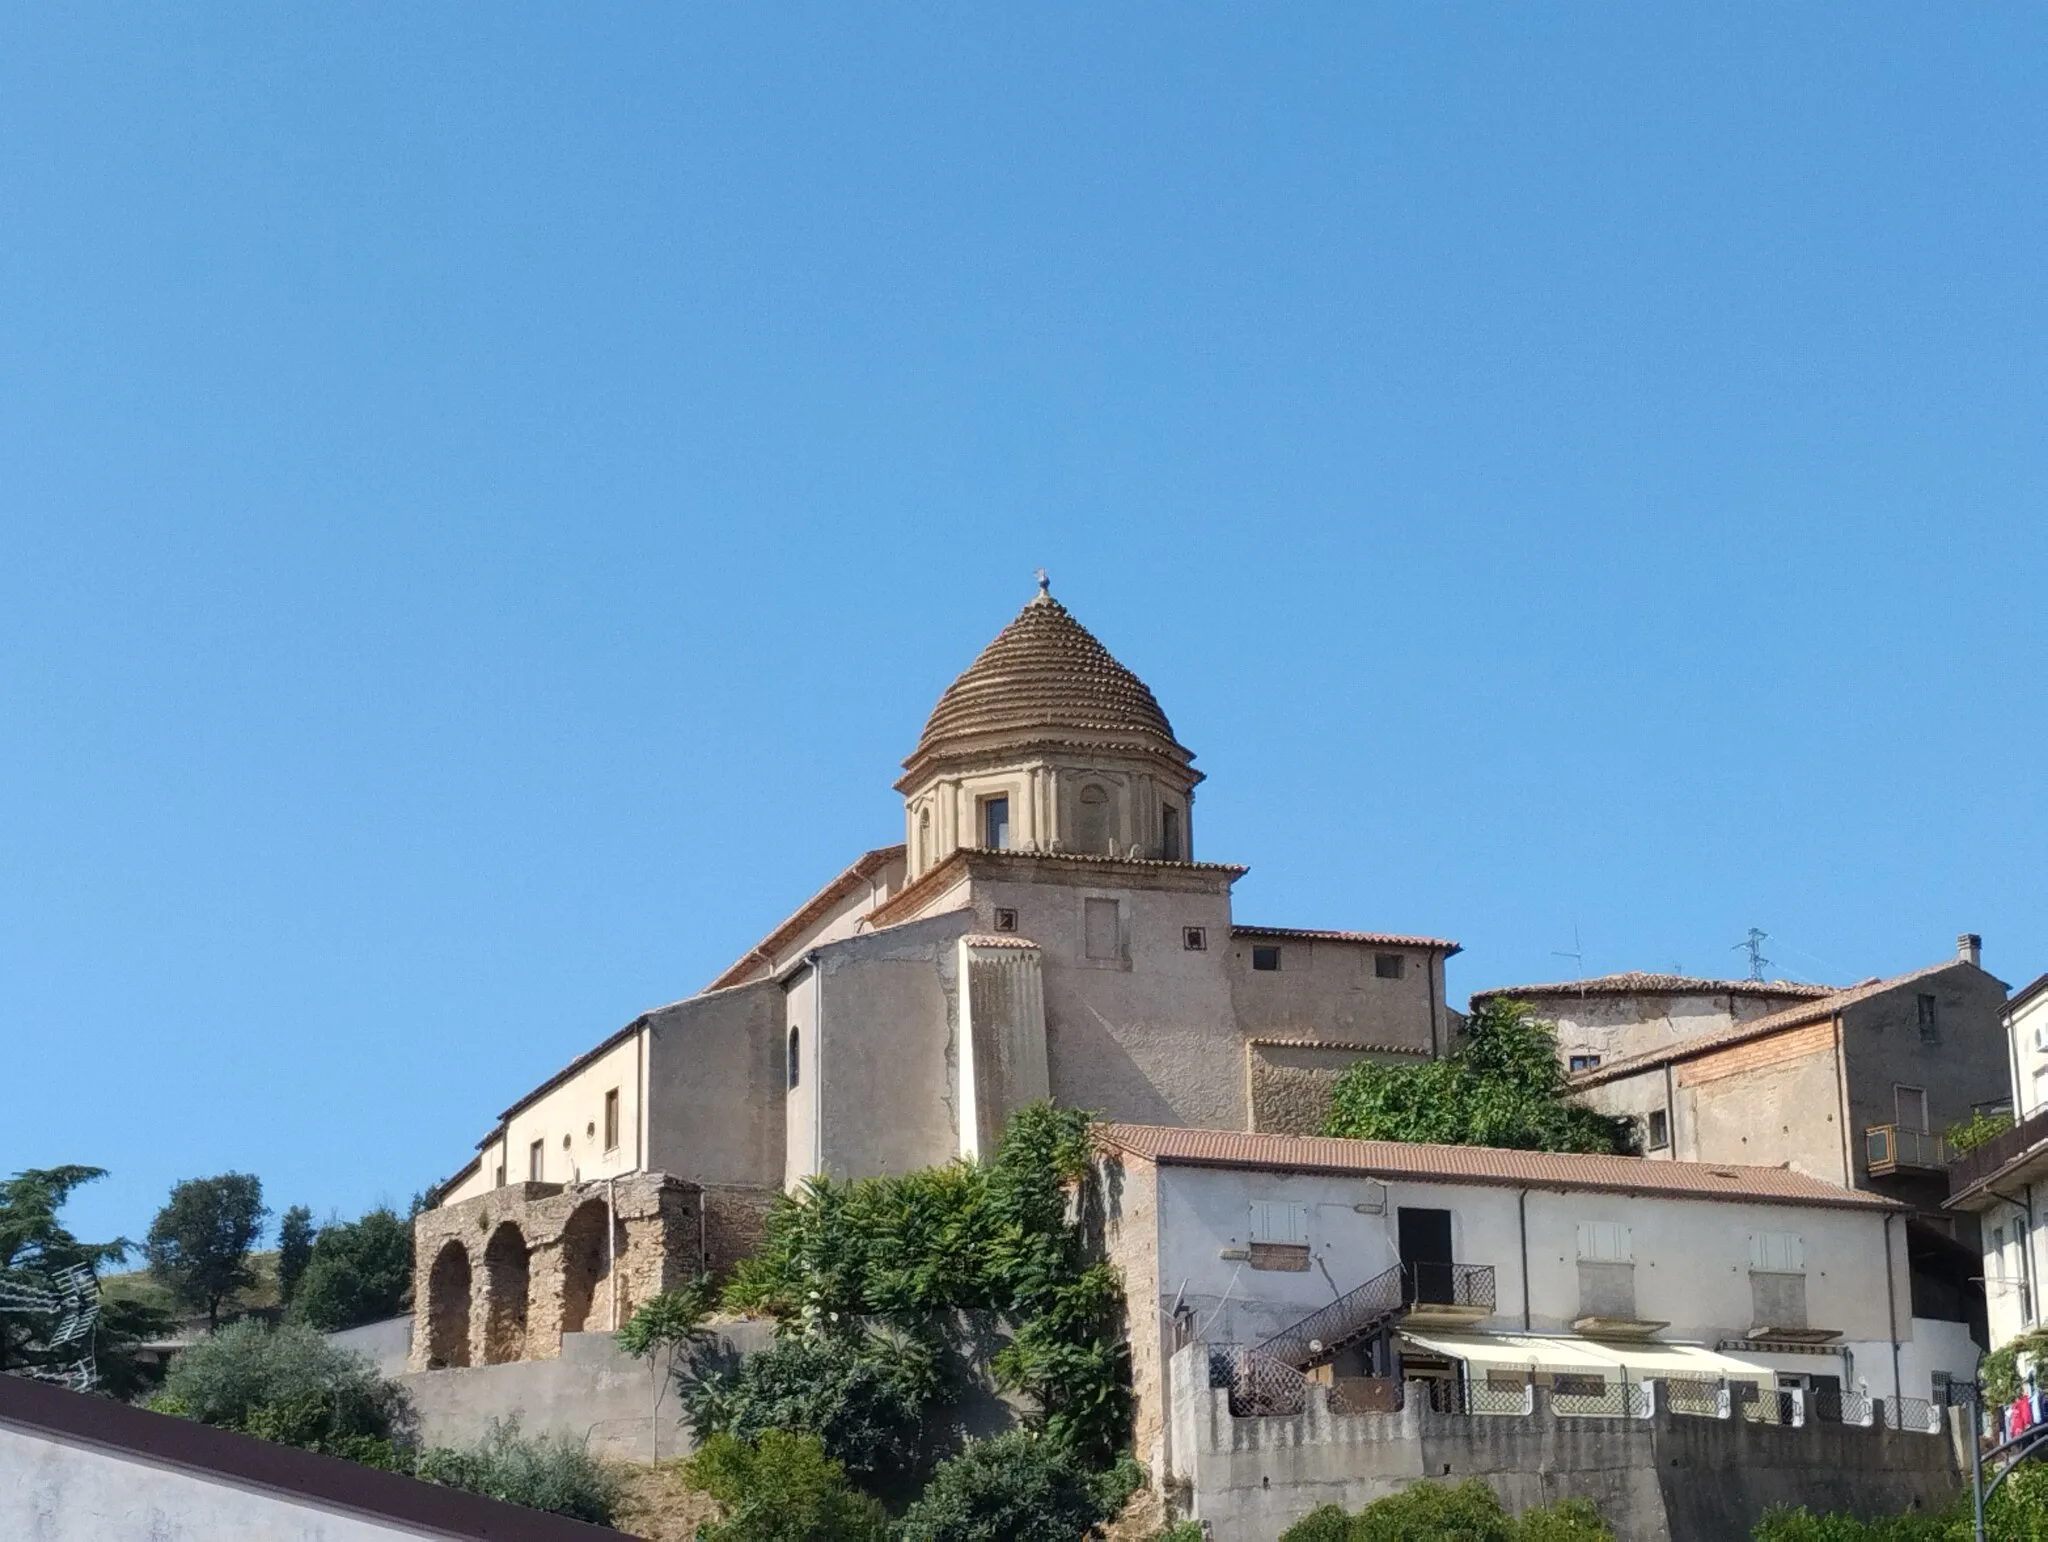 Image of Torano Castello